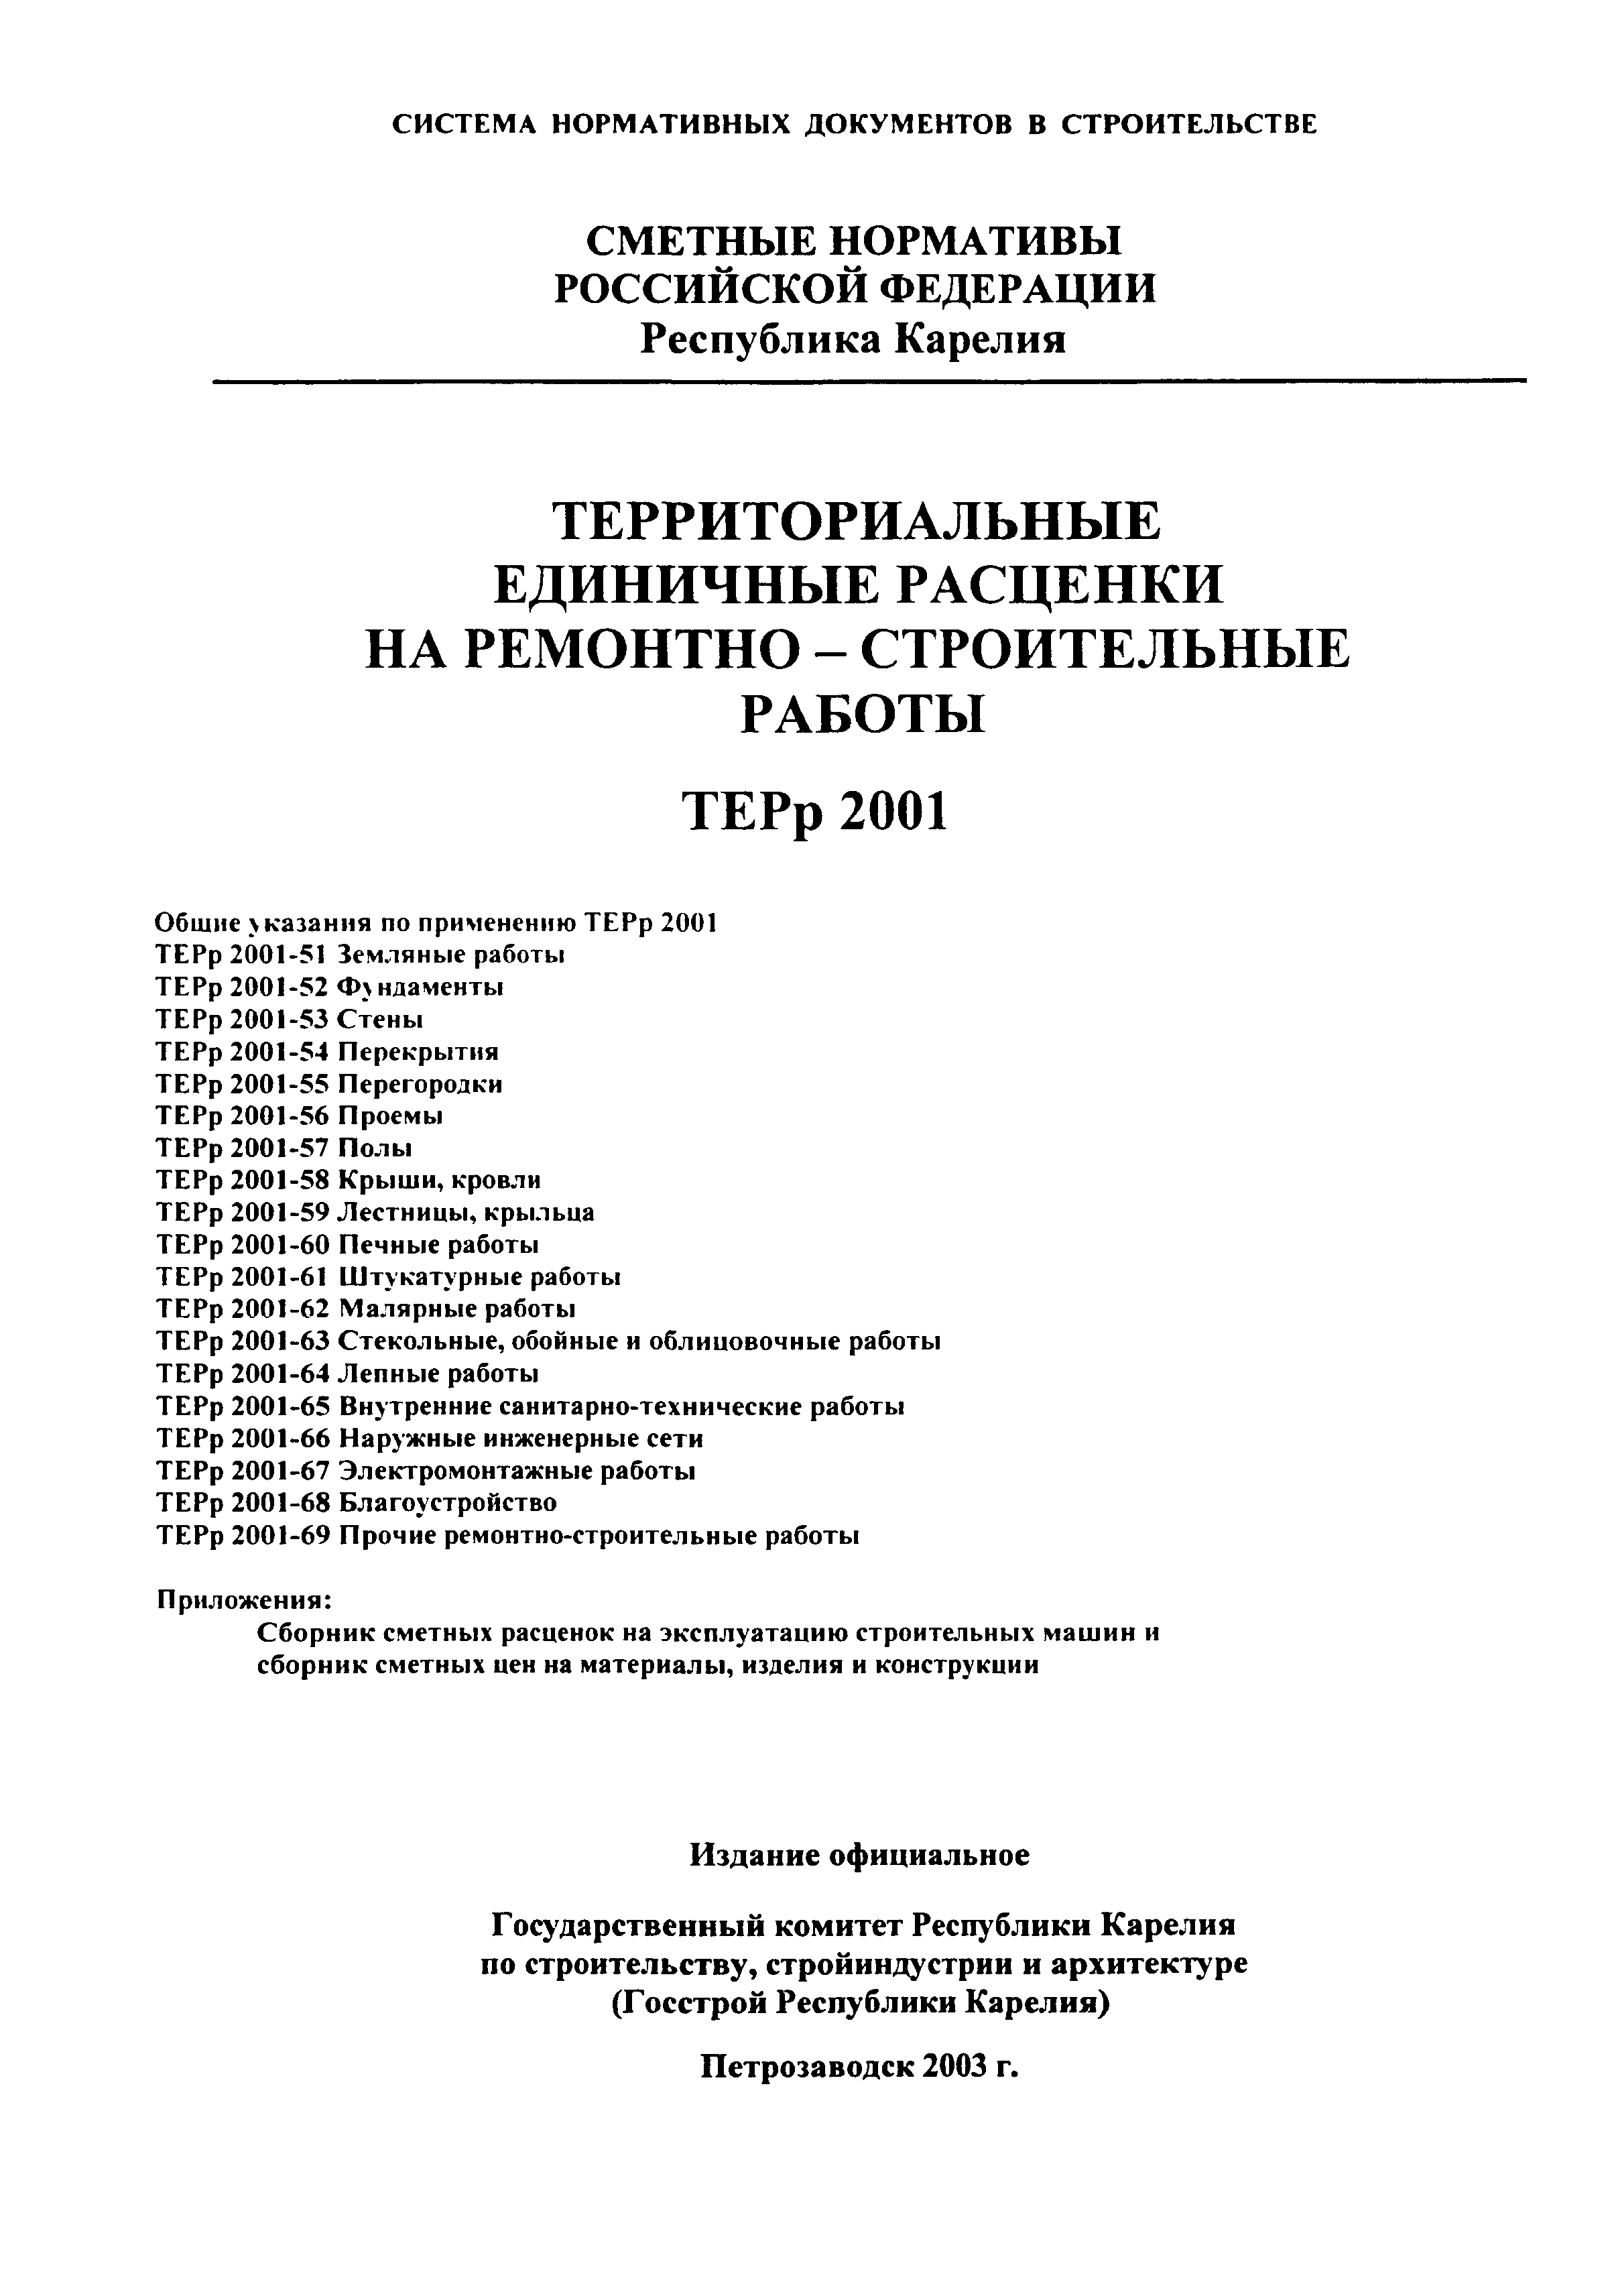 ТЕРр Республика Карелия 2001-62